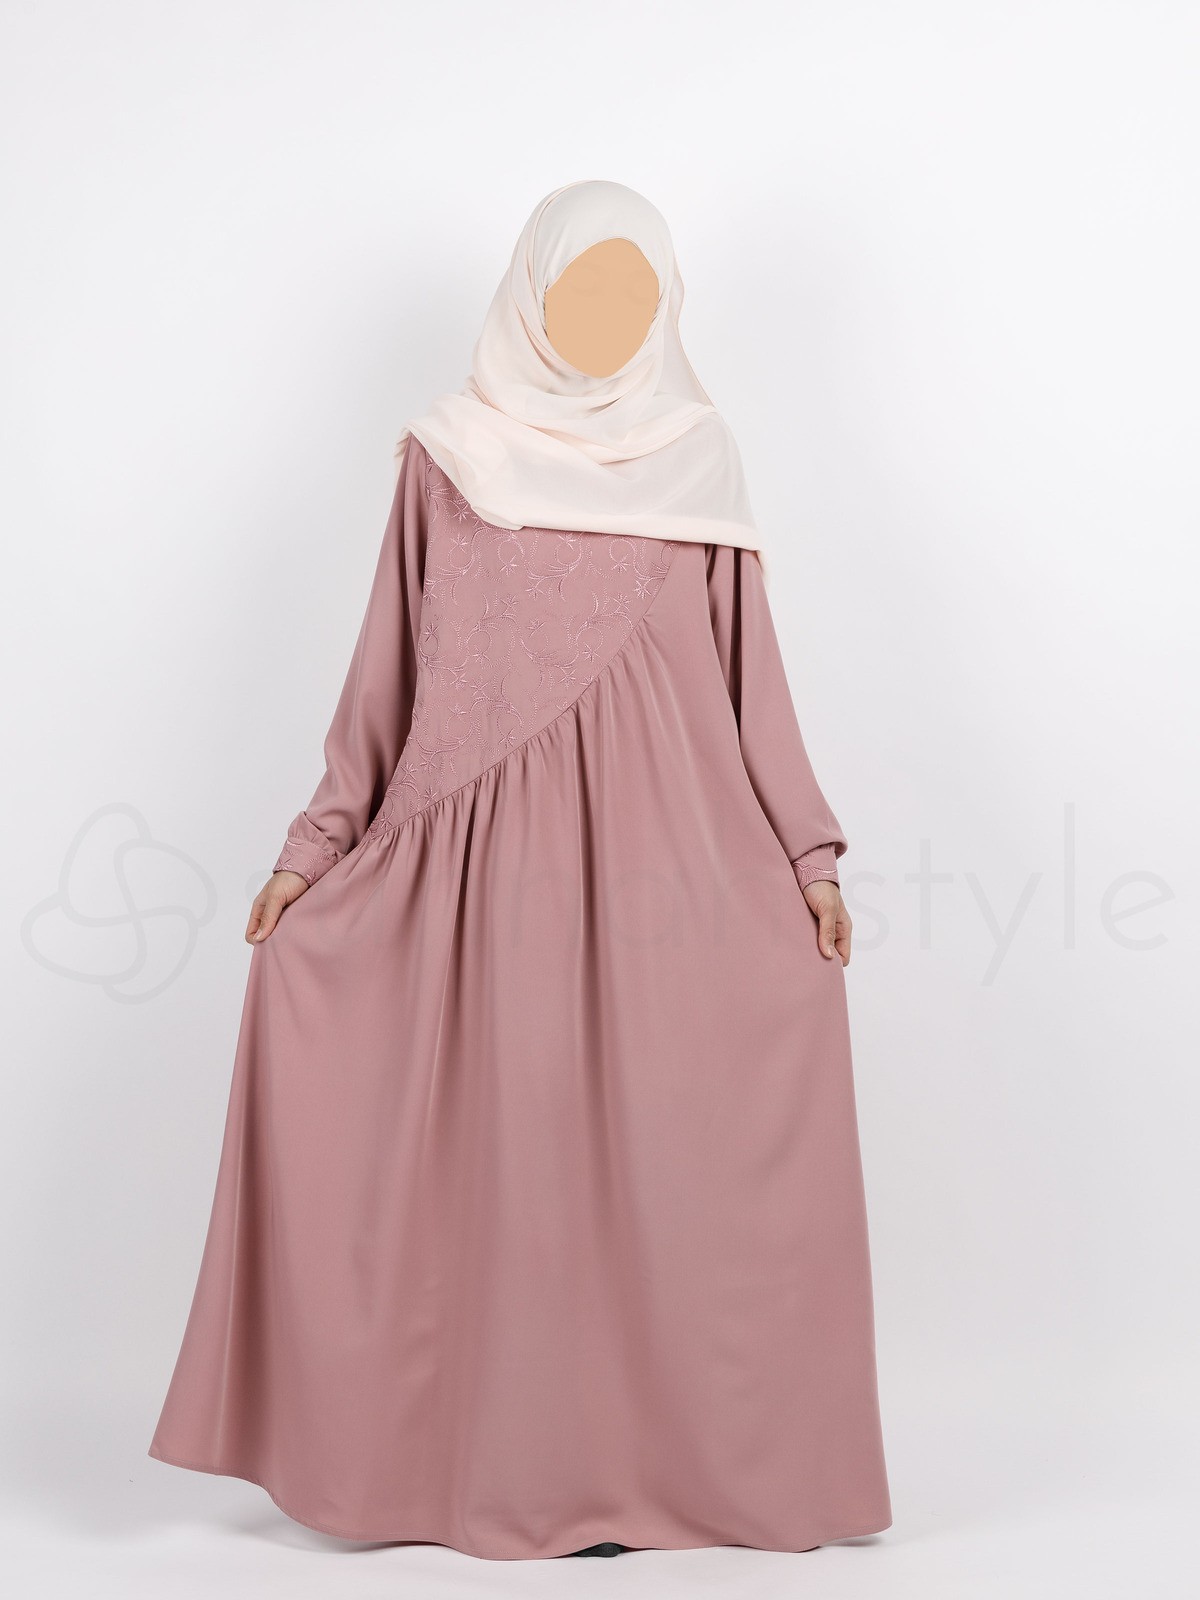 Sunnah Style - Girls Floral Umbrella Abaya (Dusty Rose)